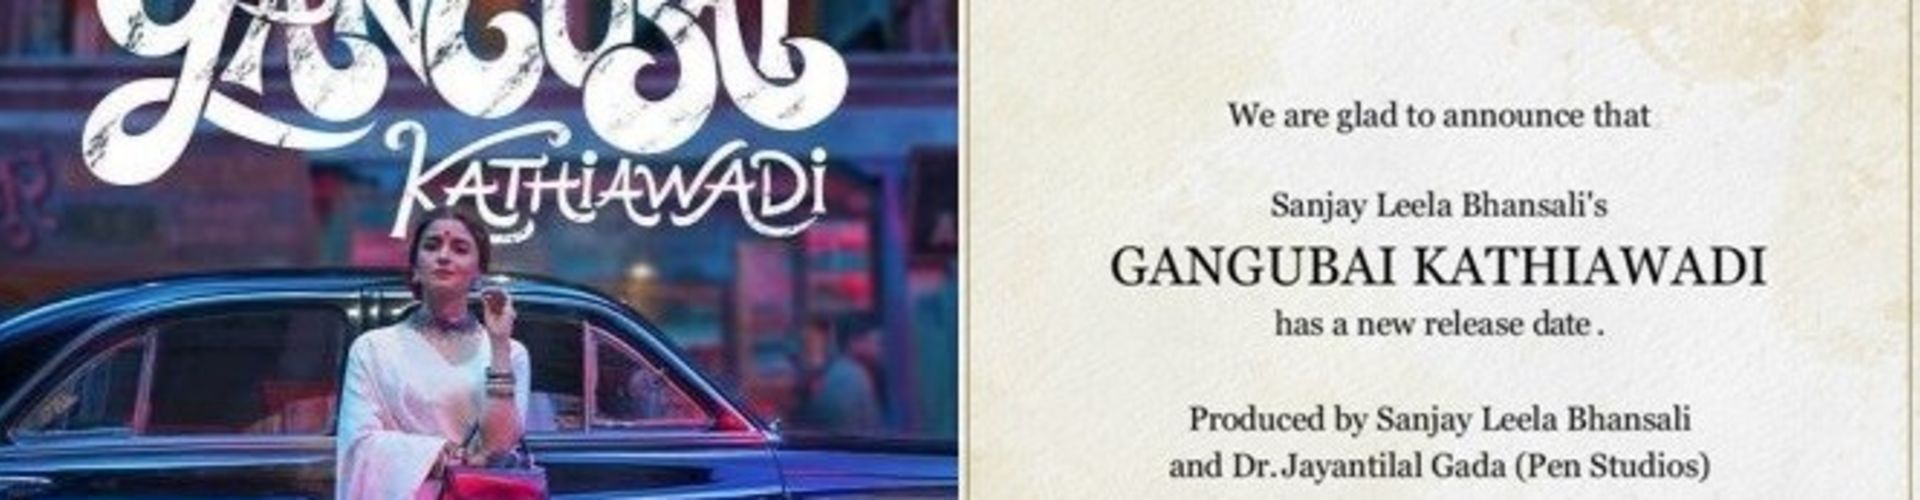 Alia Bhatt Starrer Gangubai Kathiawadi Gets A New Release Date